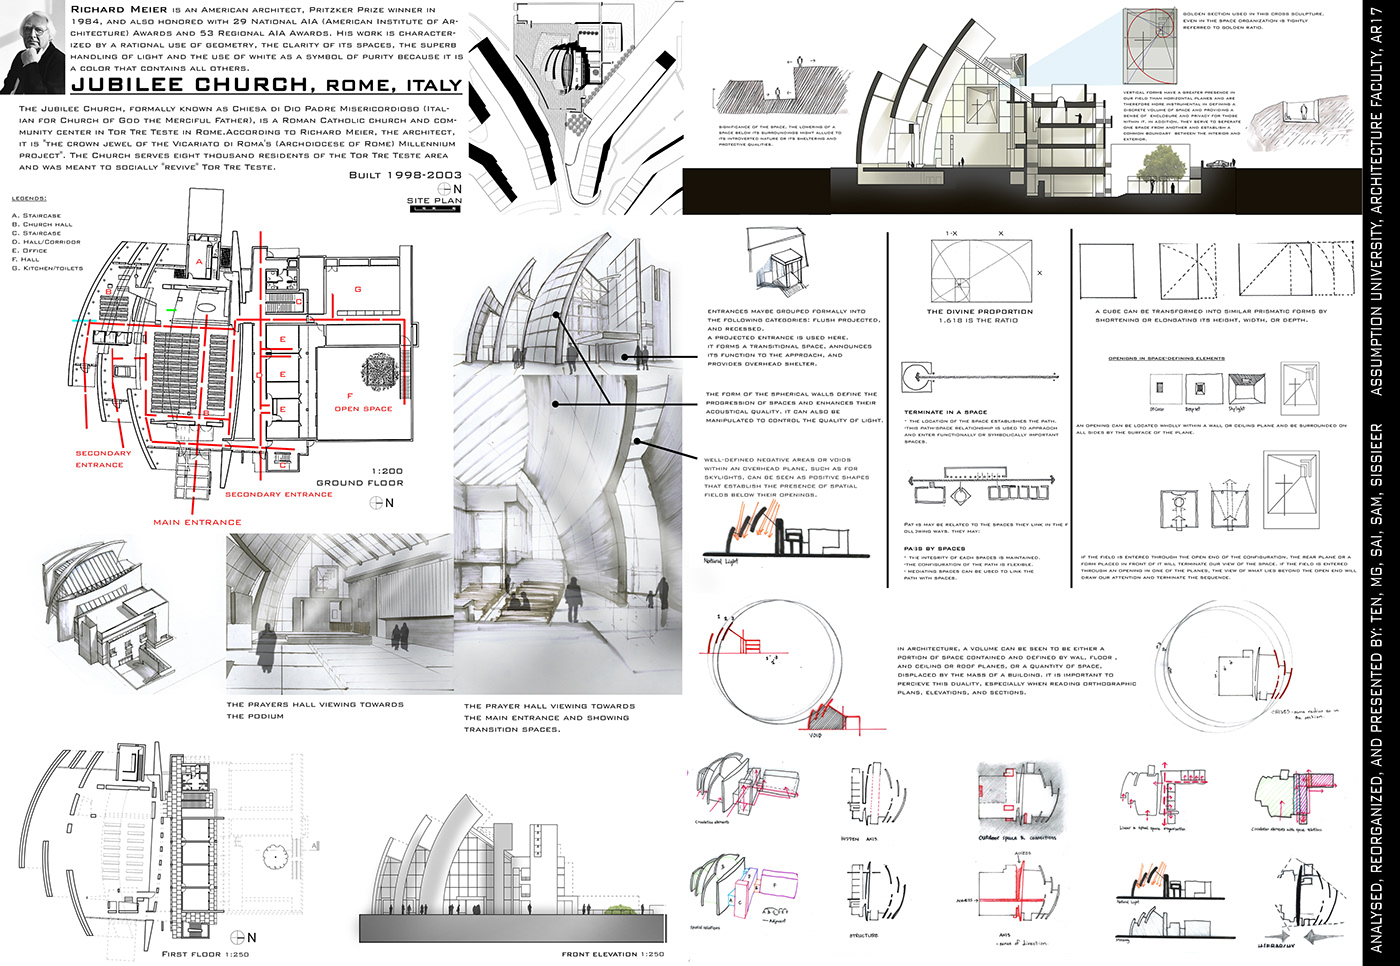 architect Architectural studies architecture Case Study church design richardmeier studentwork